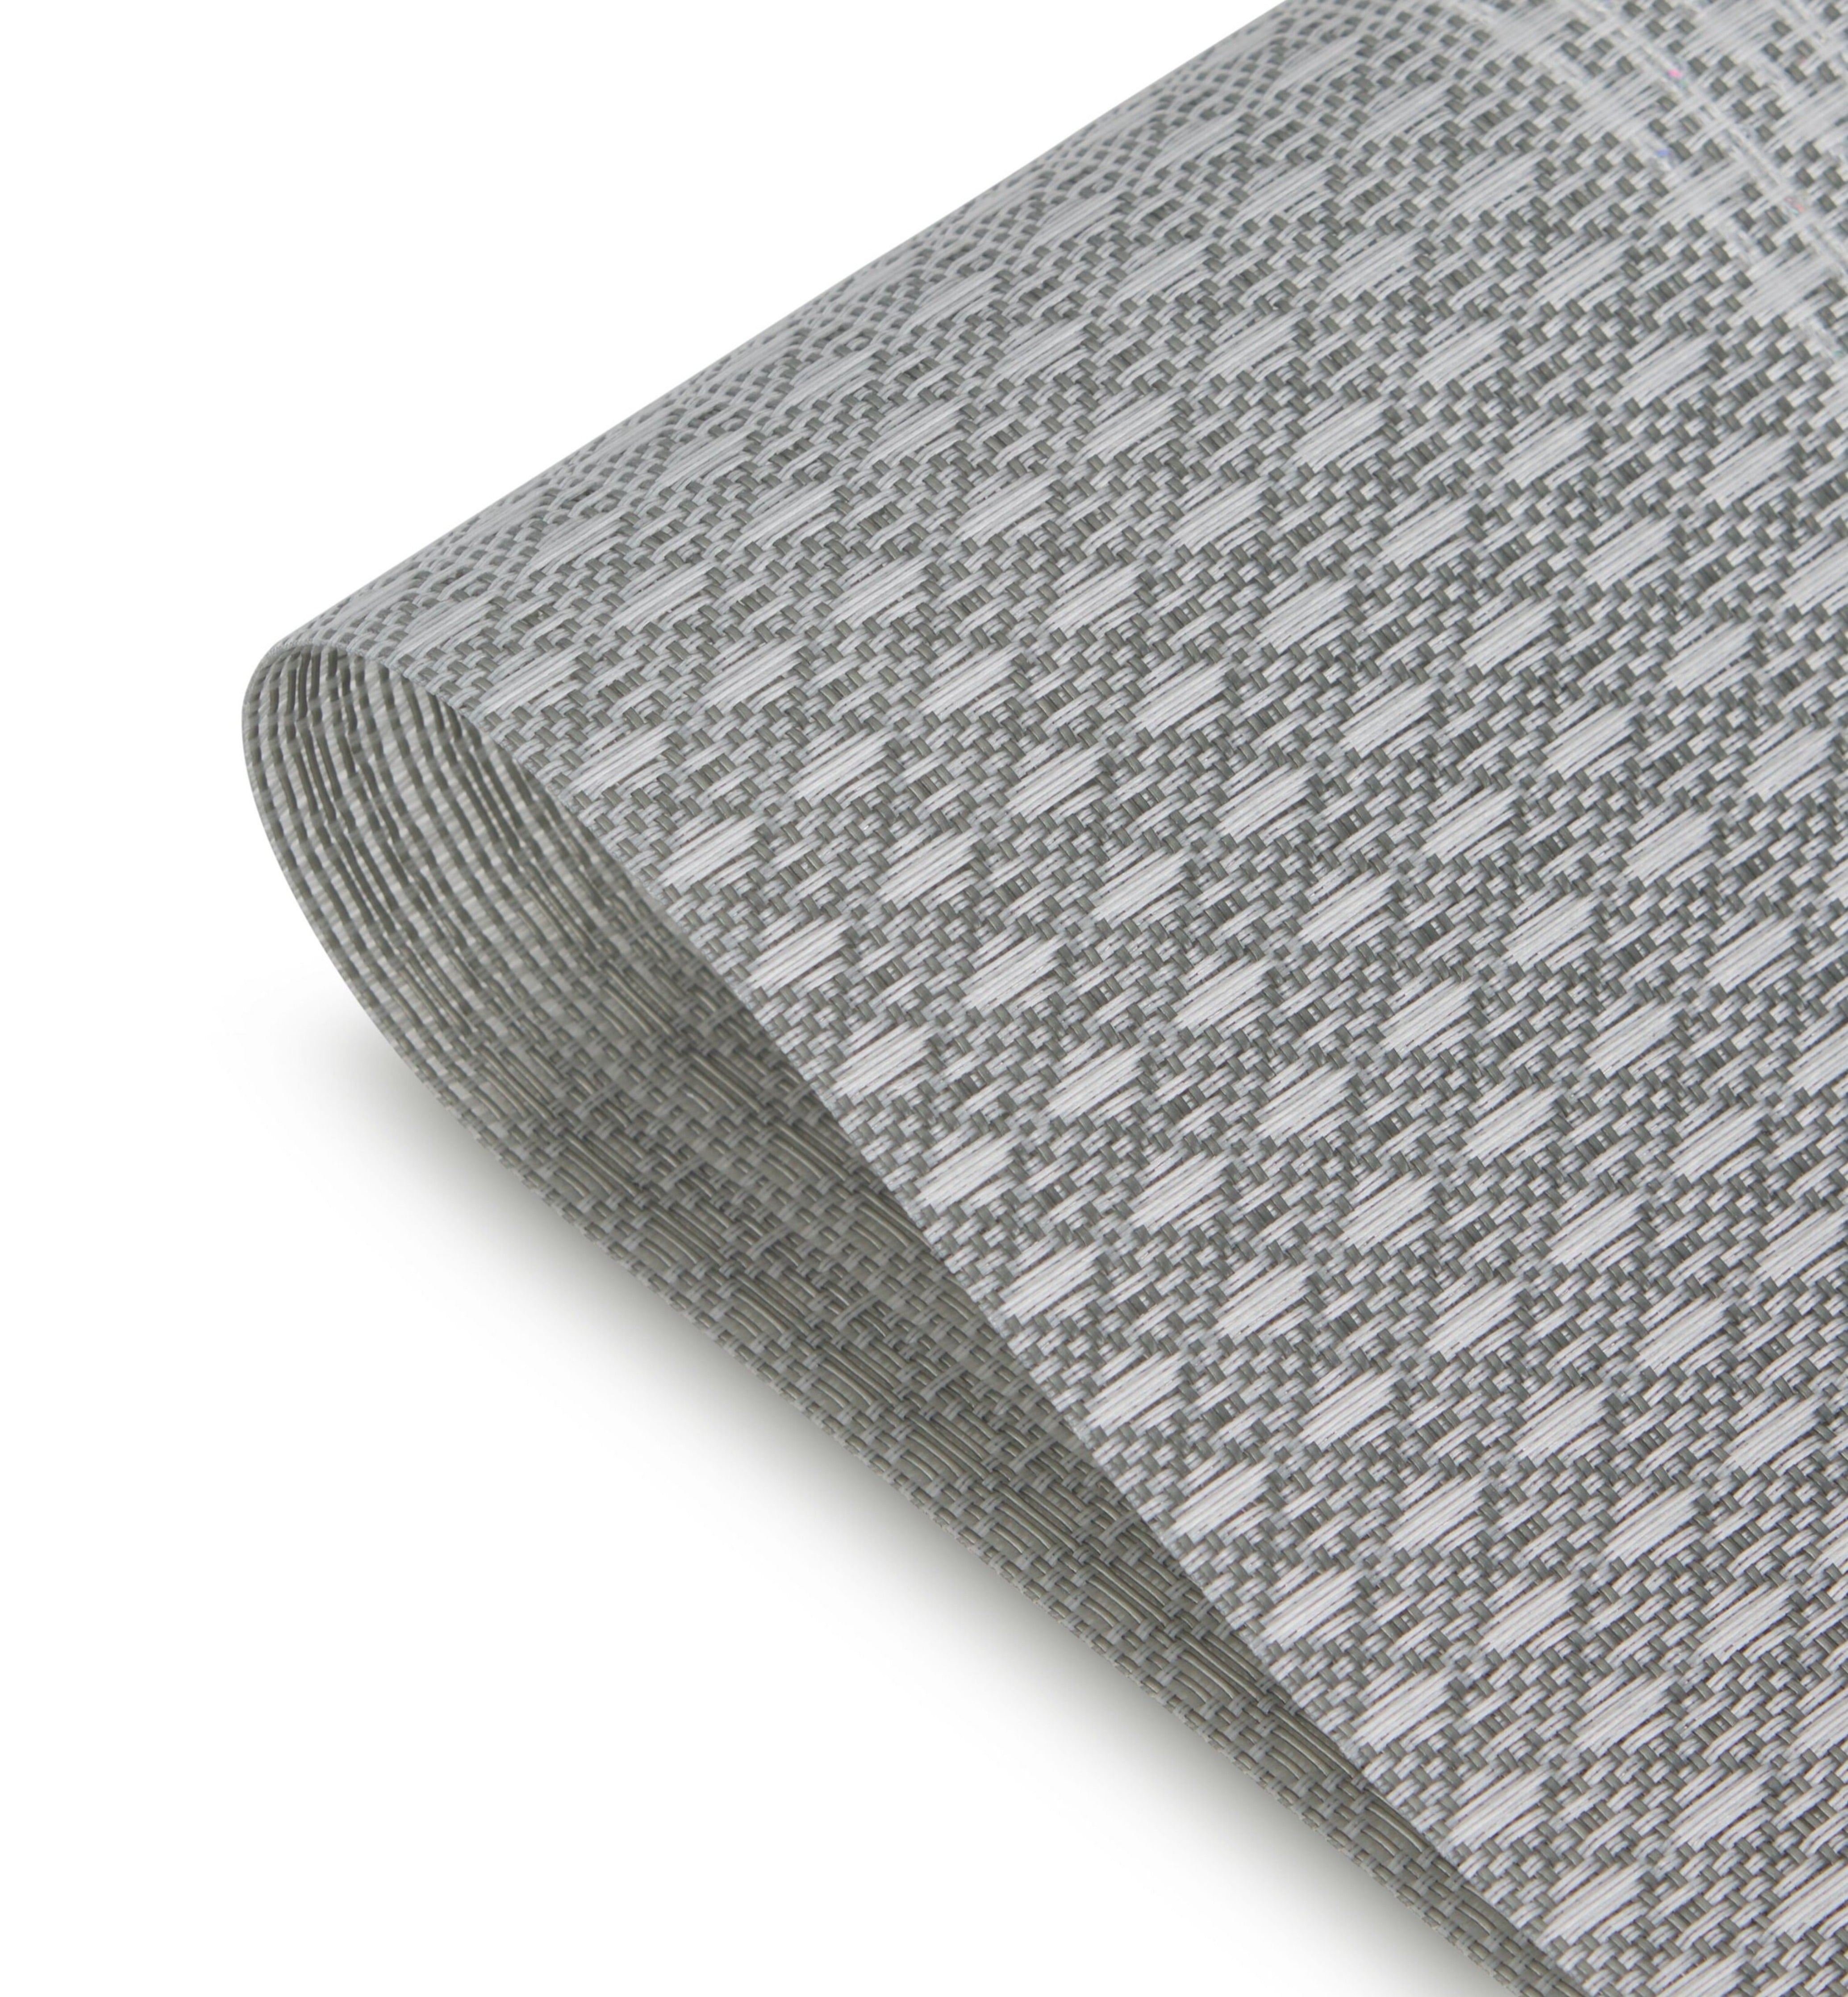 Dainty Home Milan Woven Texteline Textured Design Reversible 12" x 18" Rectangular Placemats Set of 6